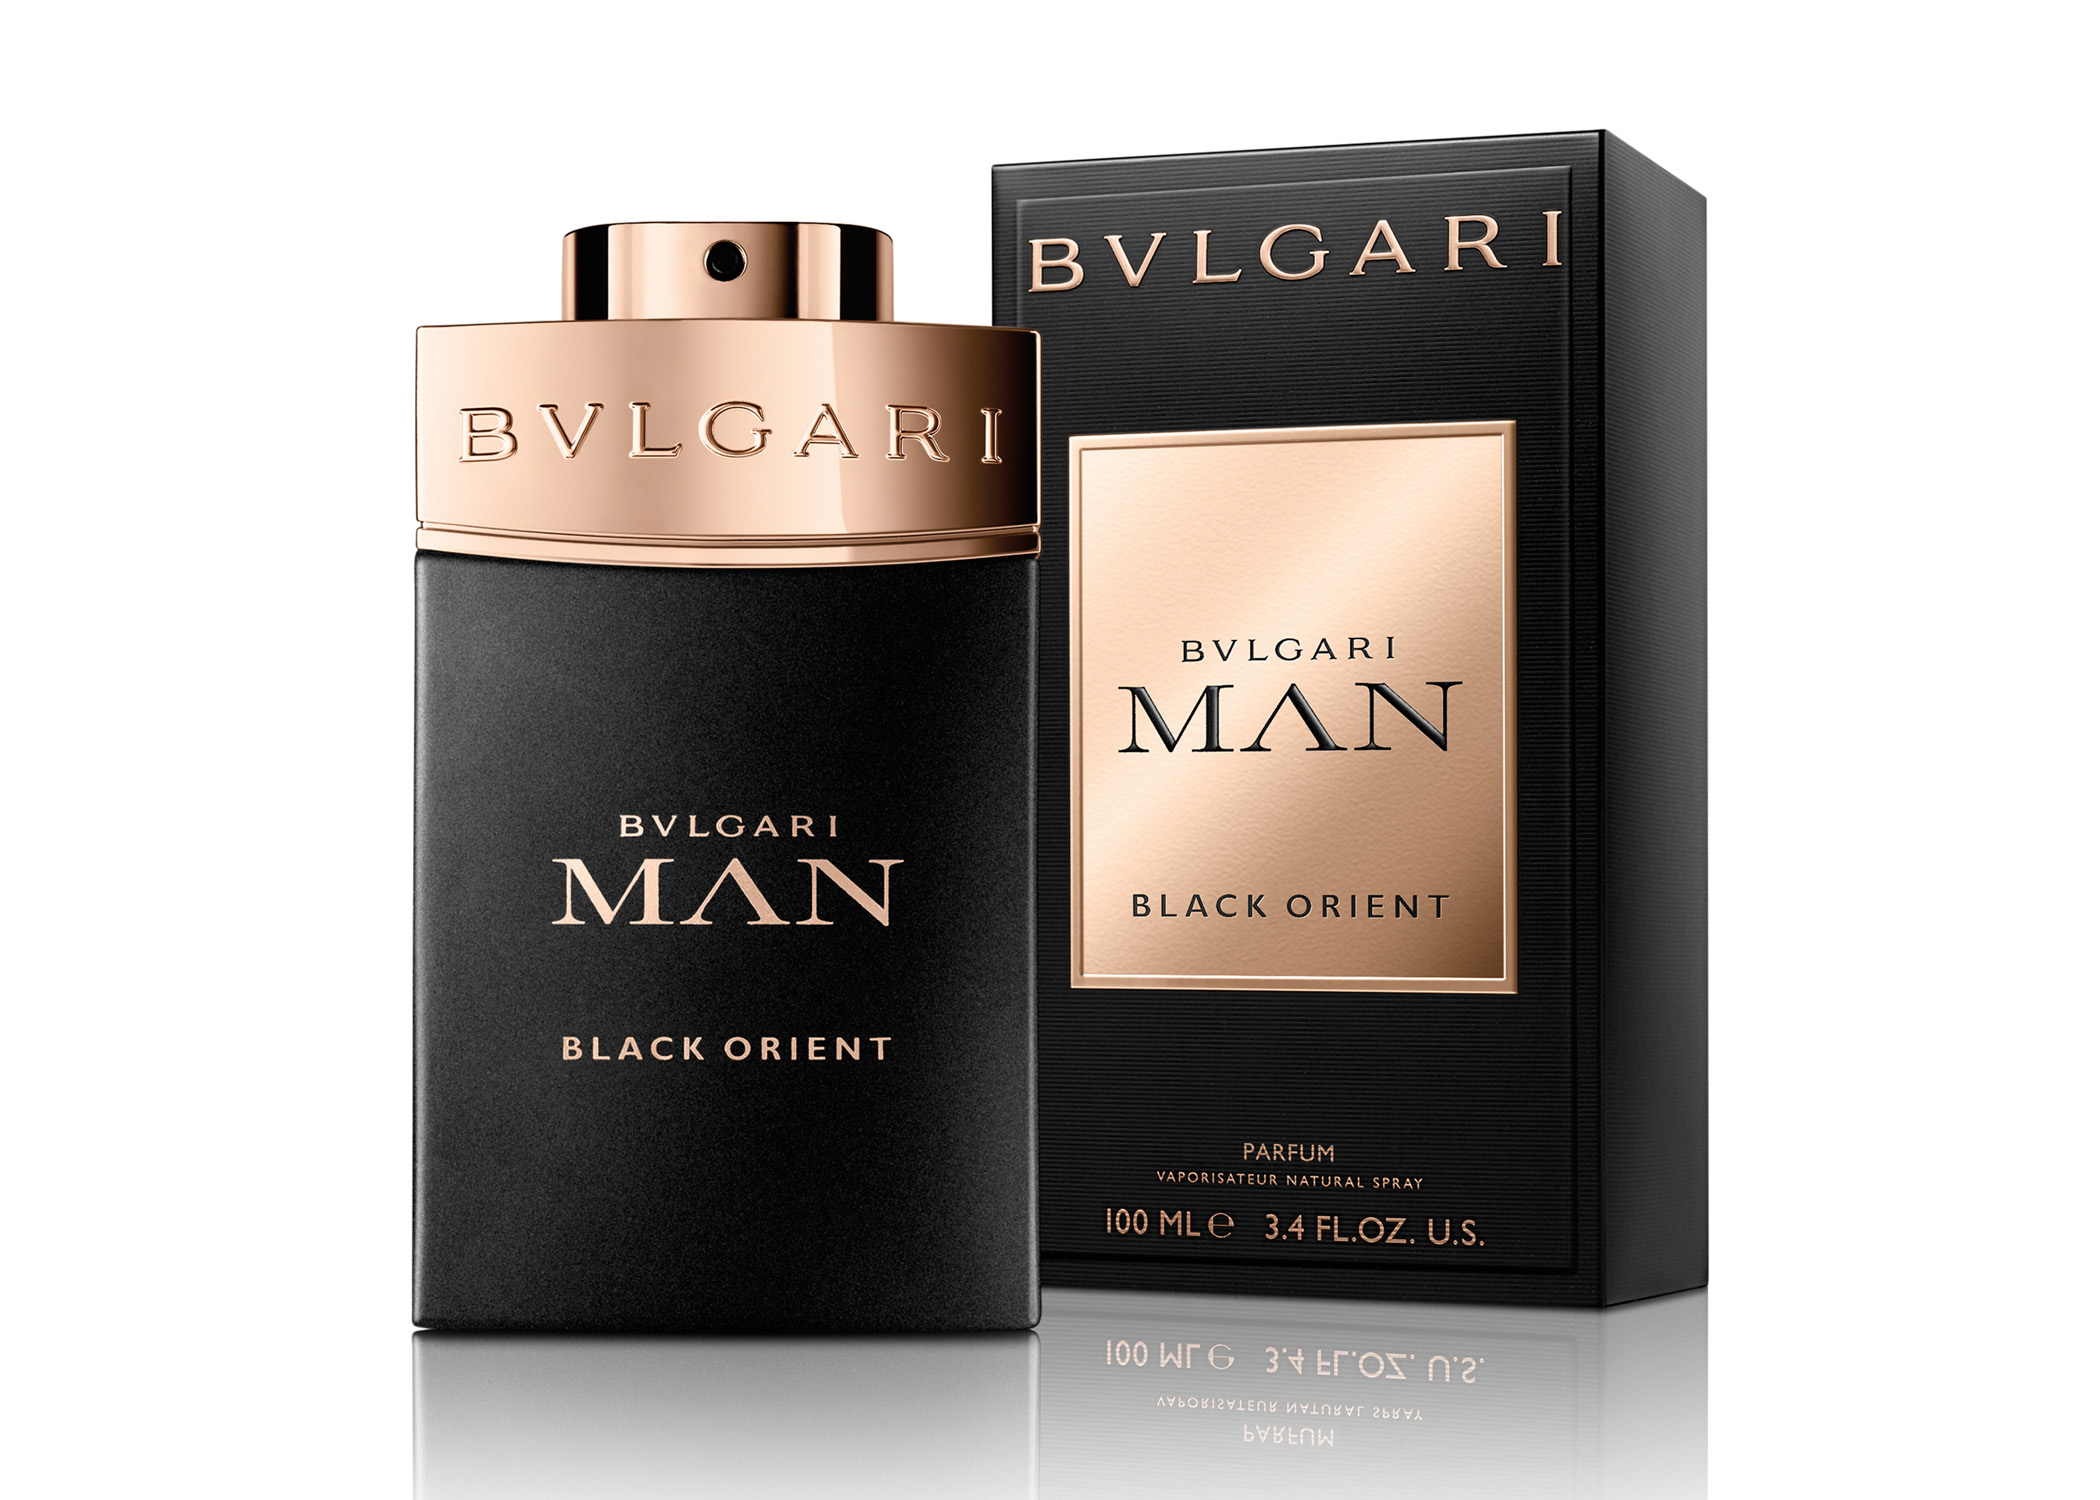 Bvlgari Man Black Orient, Parfum 60ml